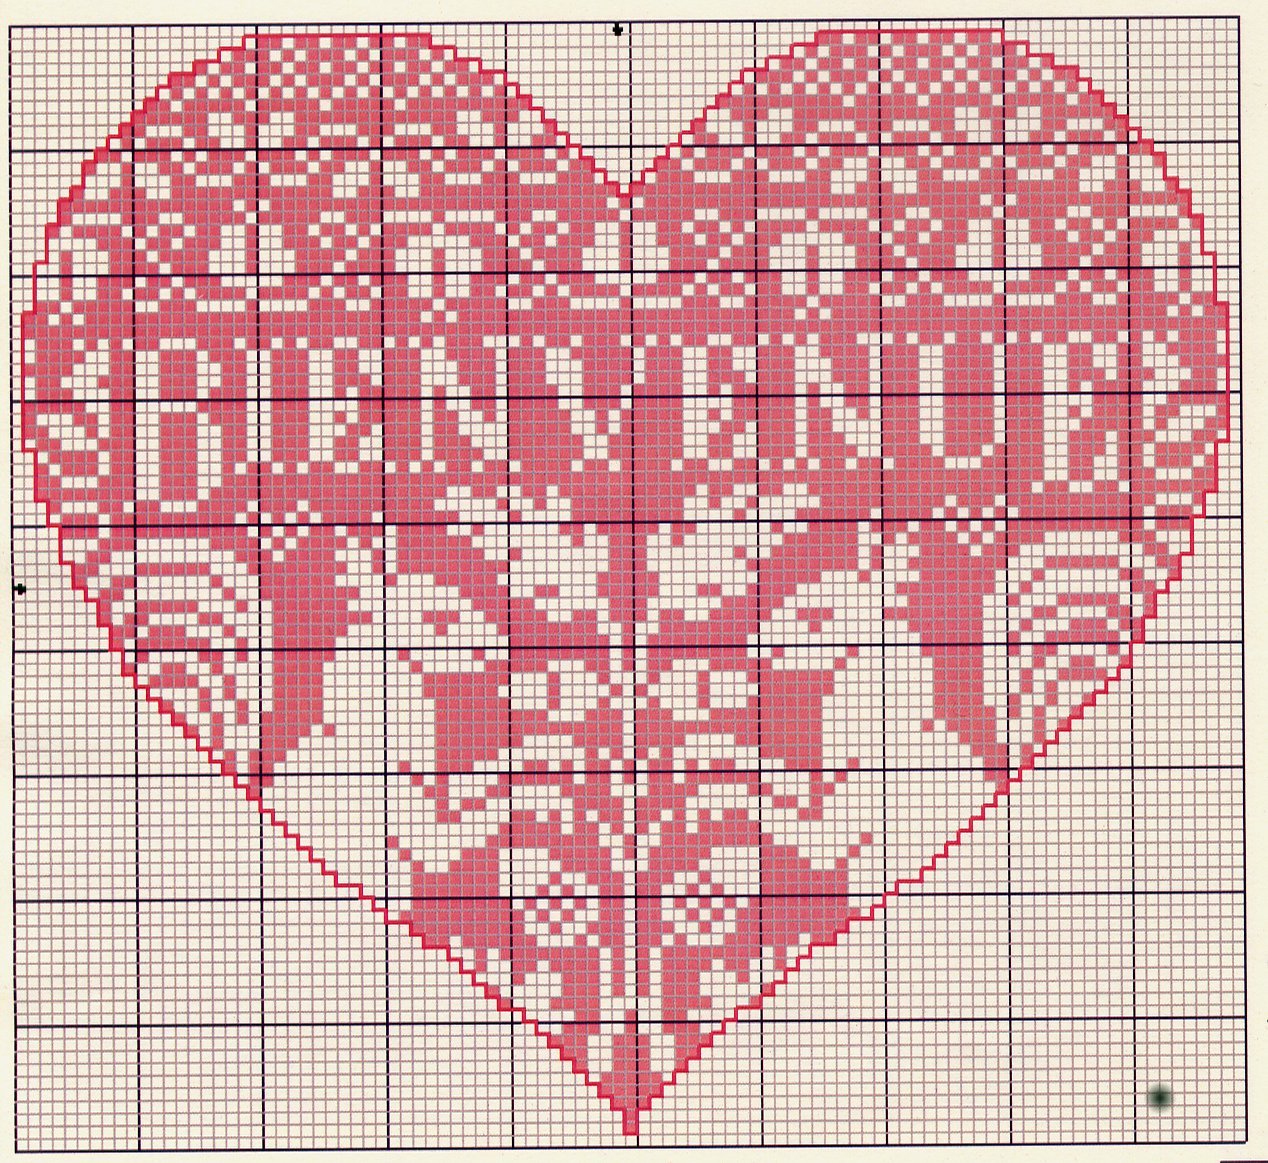 Heart Bienvenue cross stitch pattern